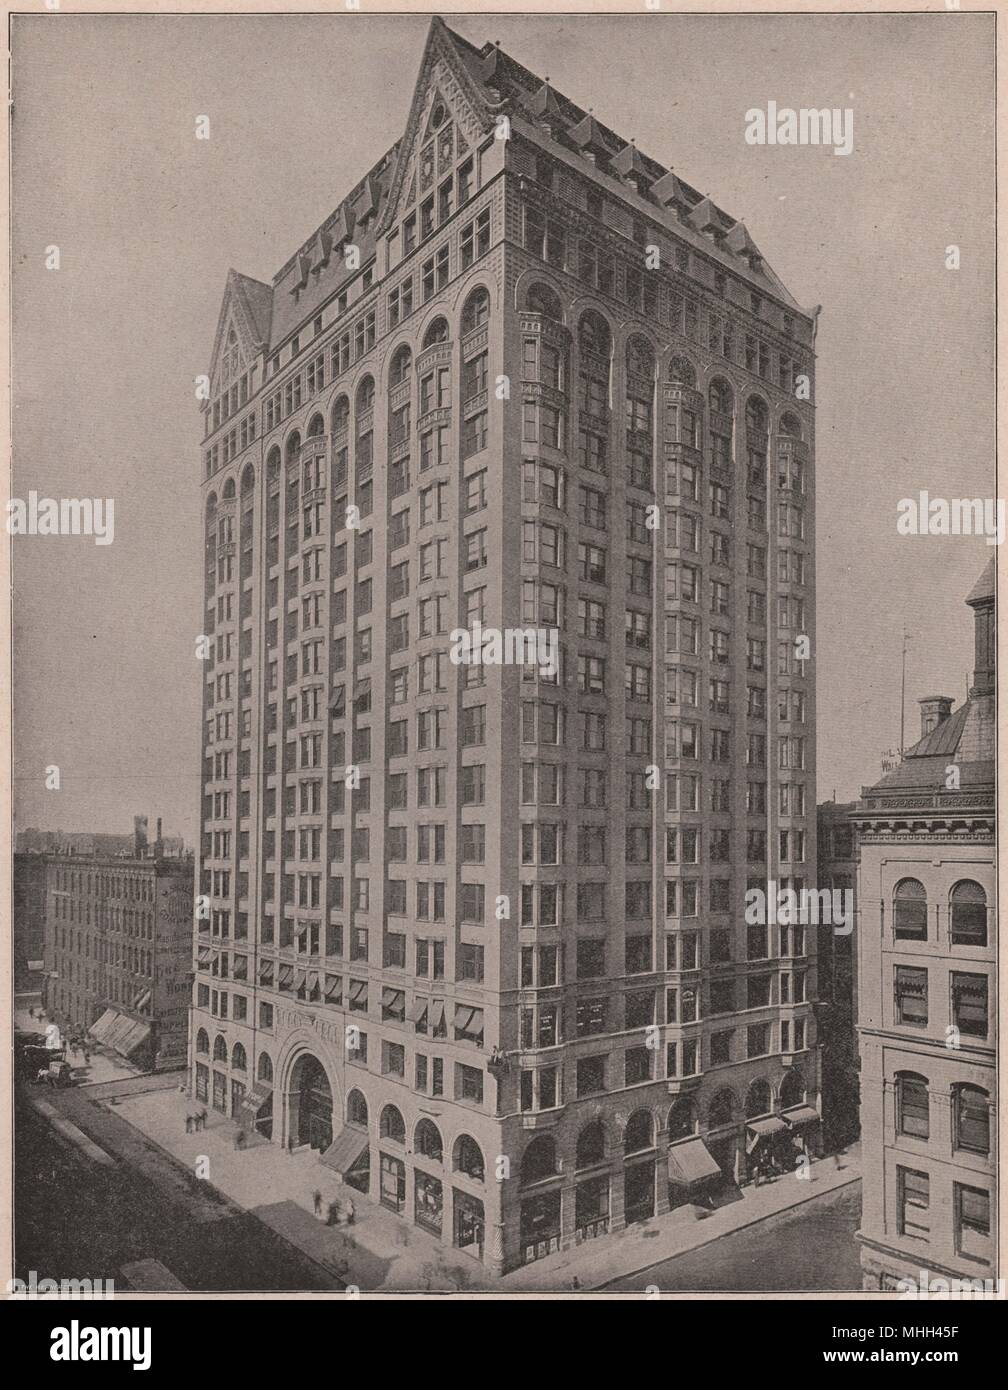 The Masonic Temple, Chicago Stock Photo - Alamy